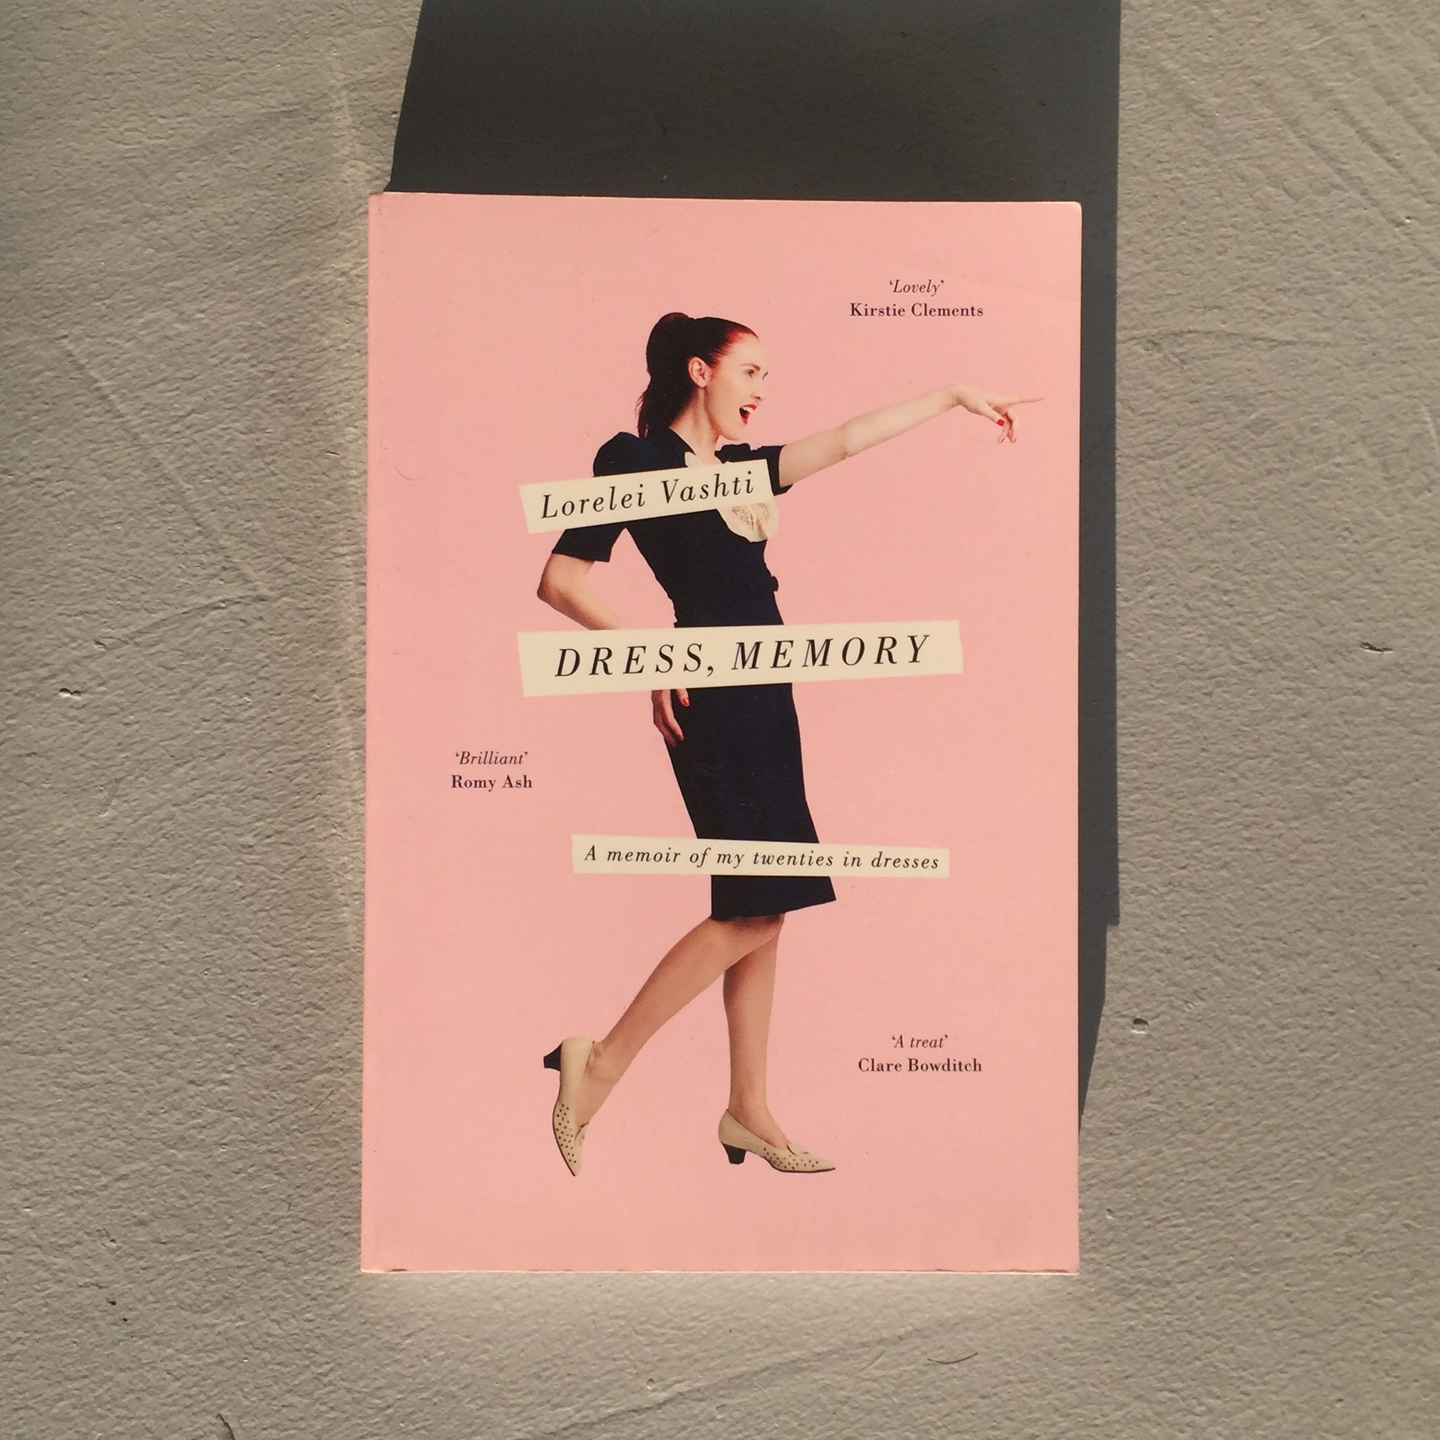 Dress, Memory by Lorelei Vashti [Paperback]